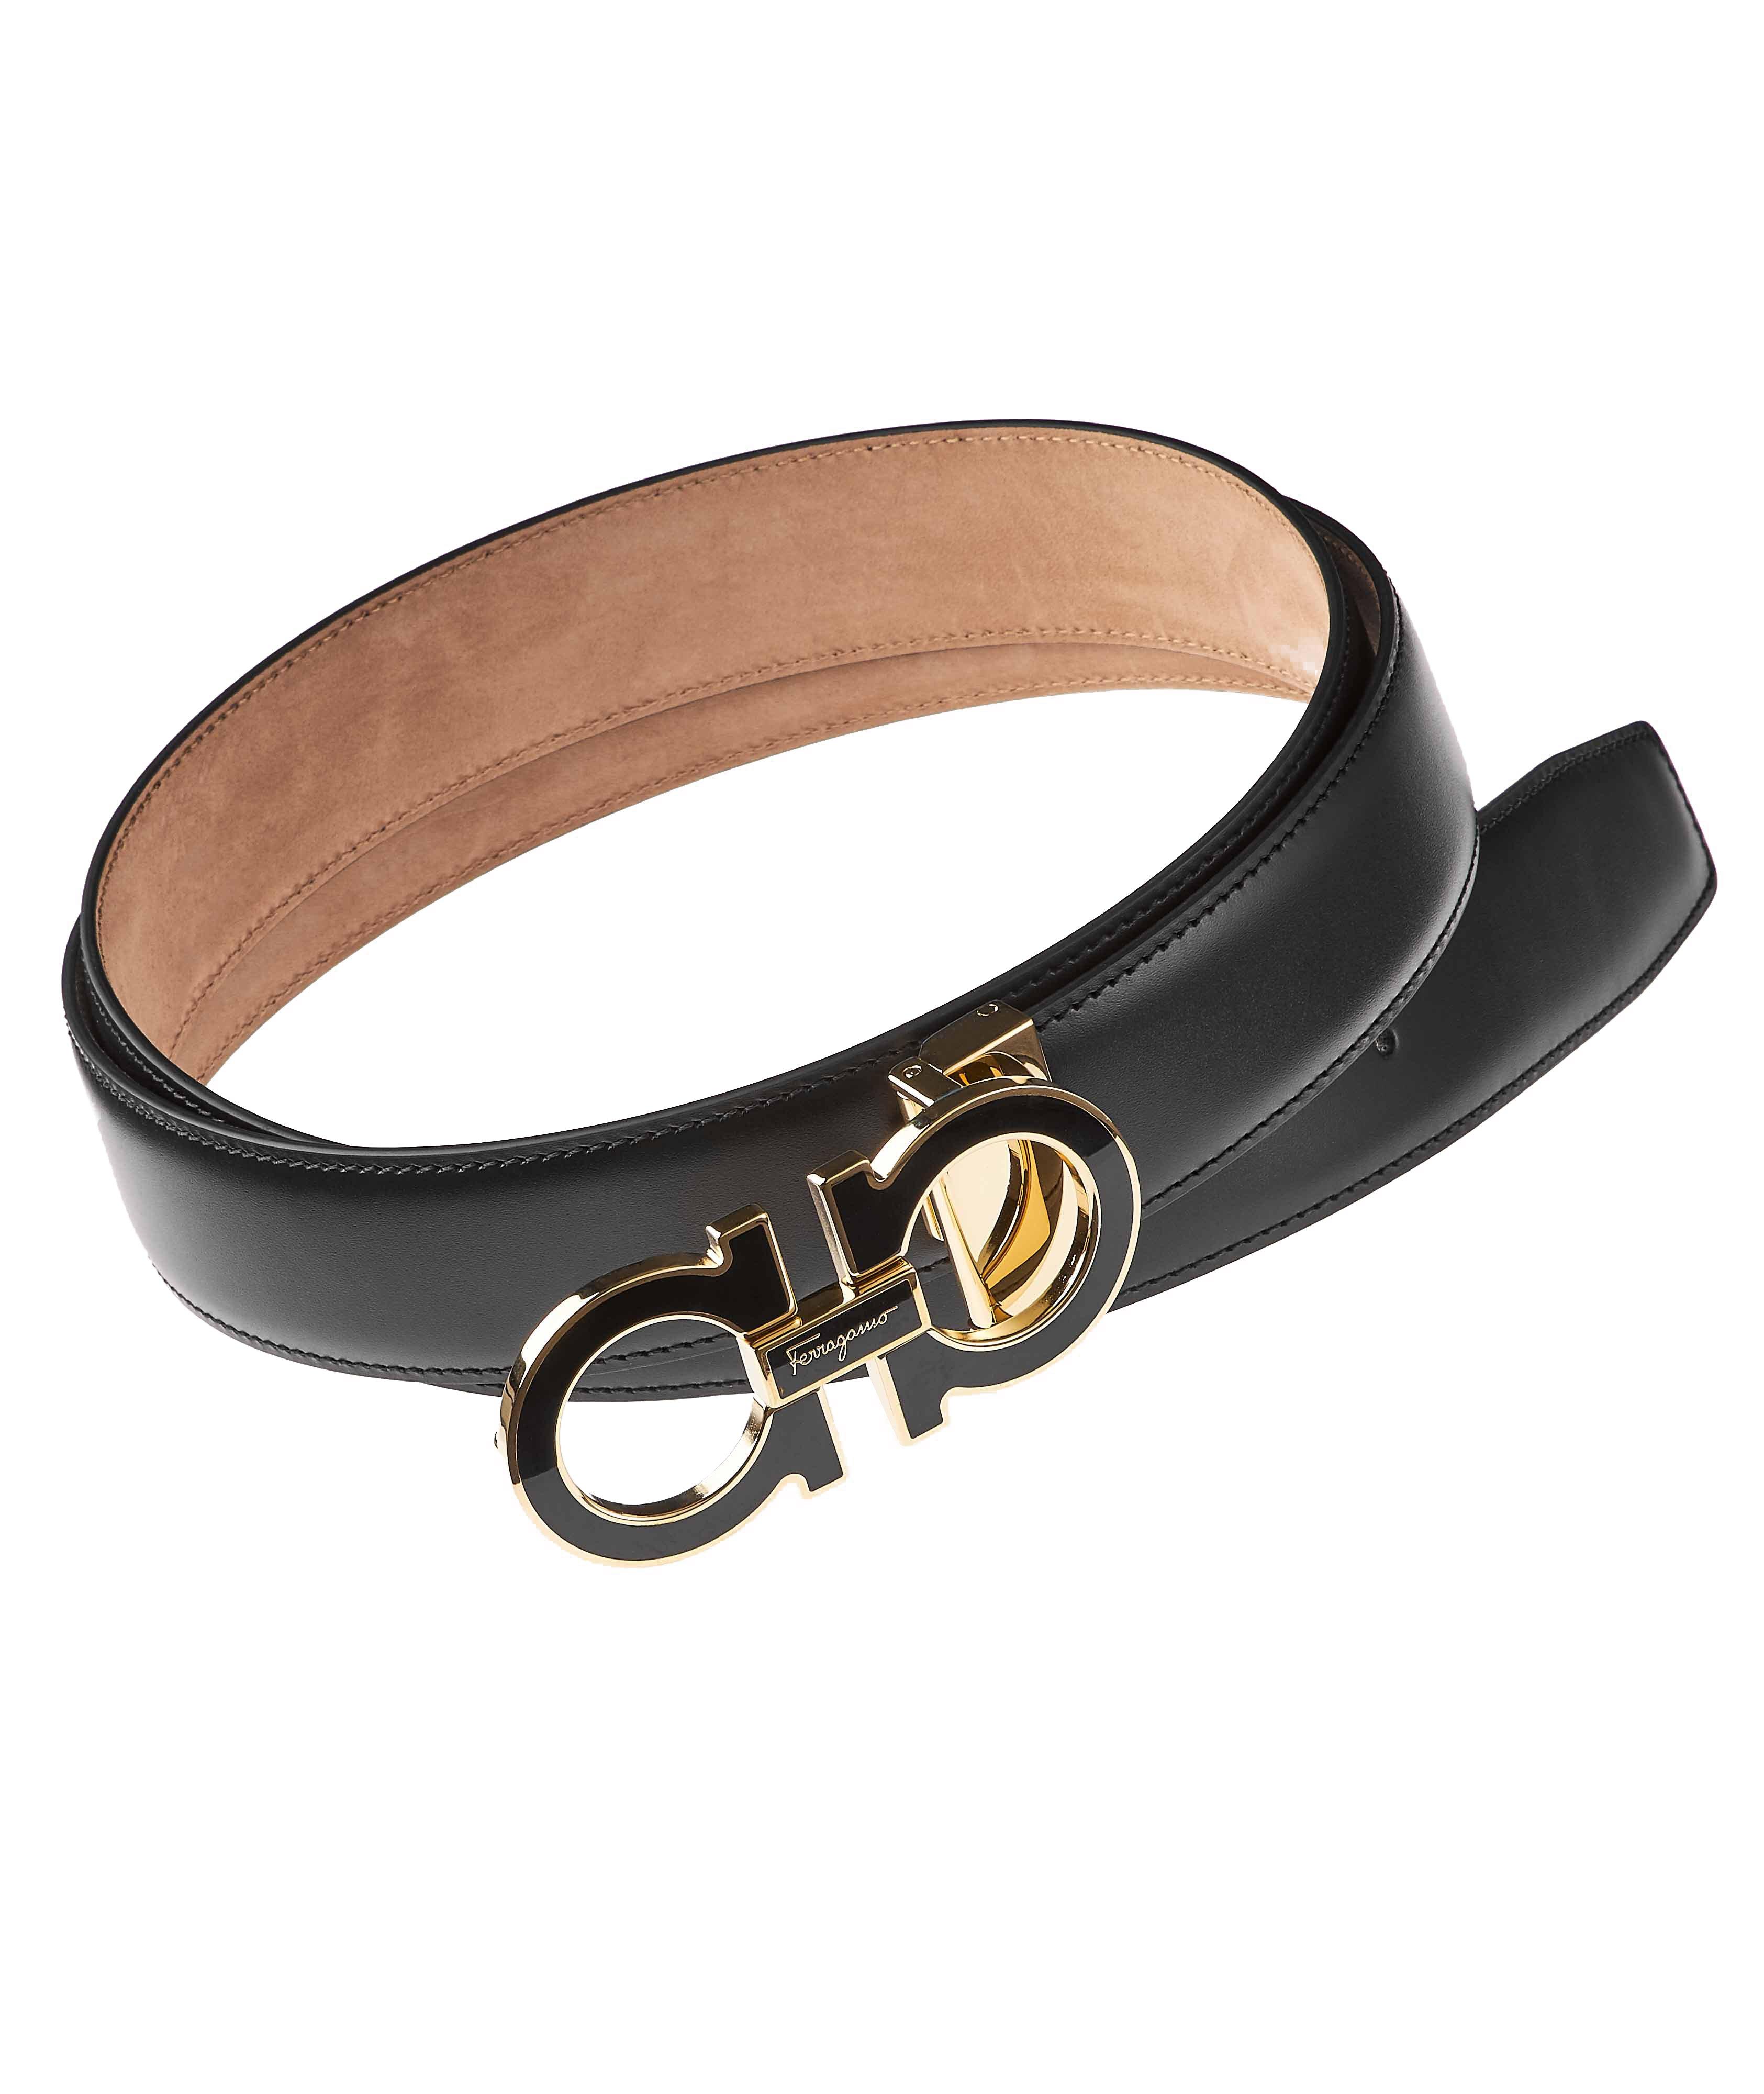 Double Gancini Leather Belt image 0